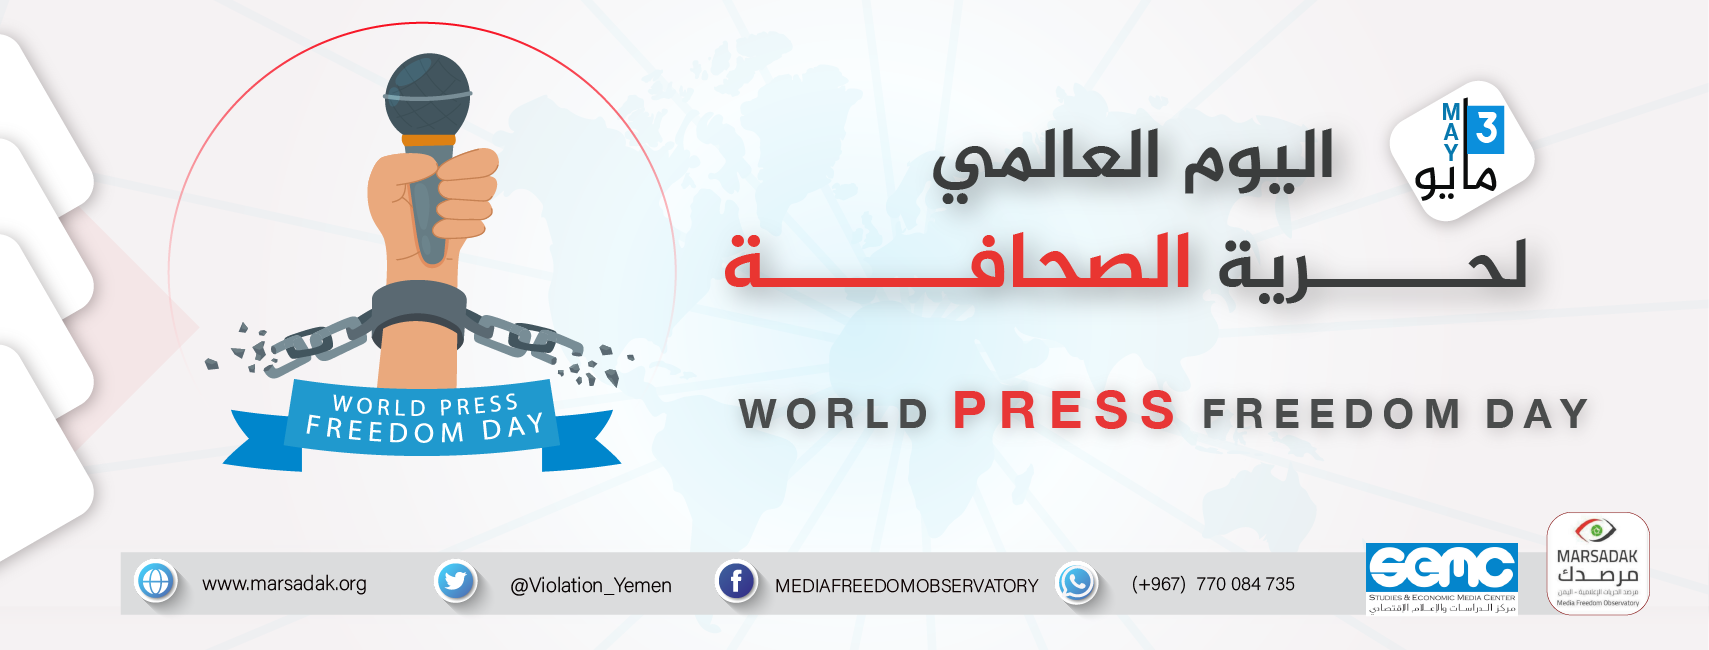 On World Press Freedom Day: